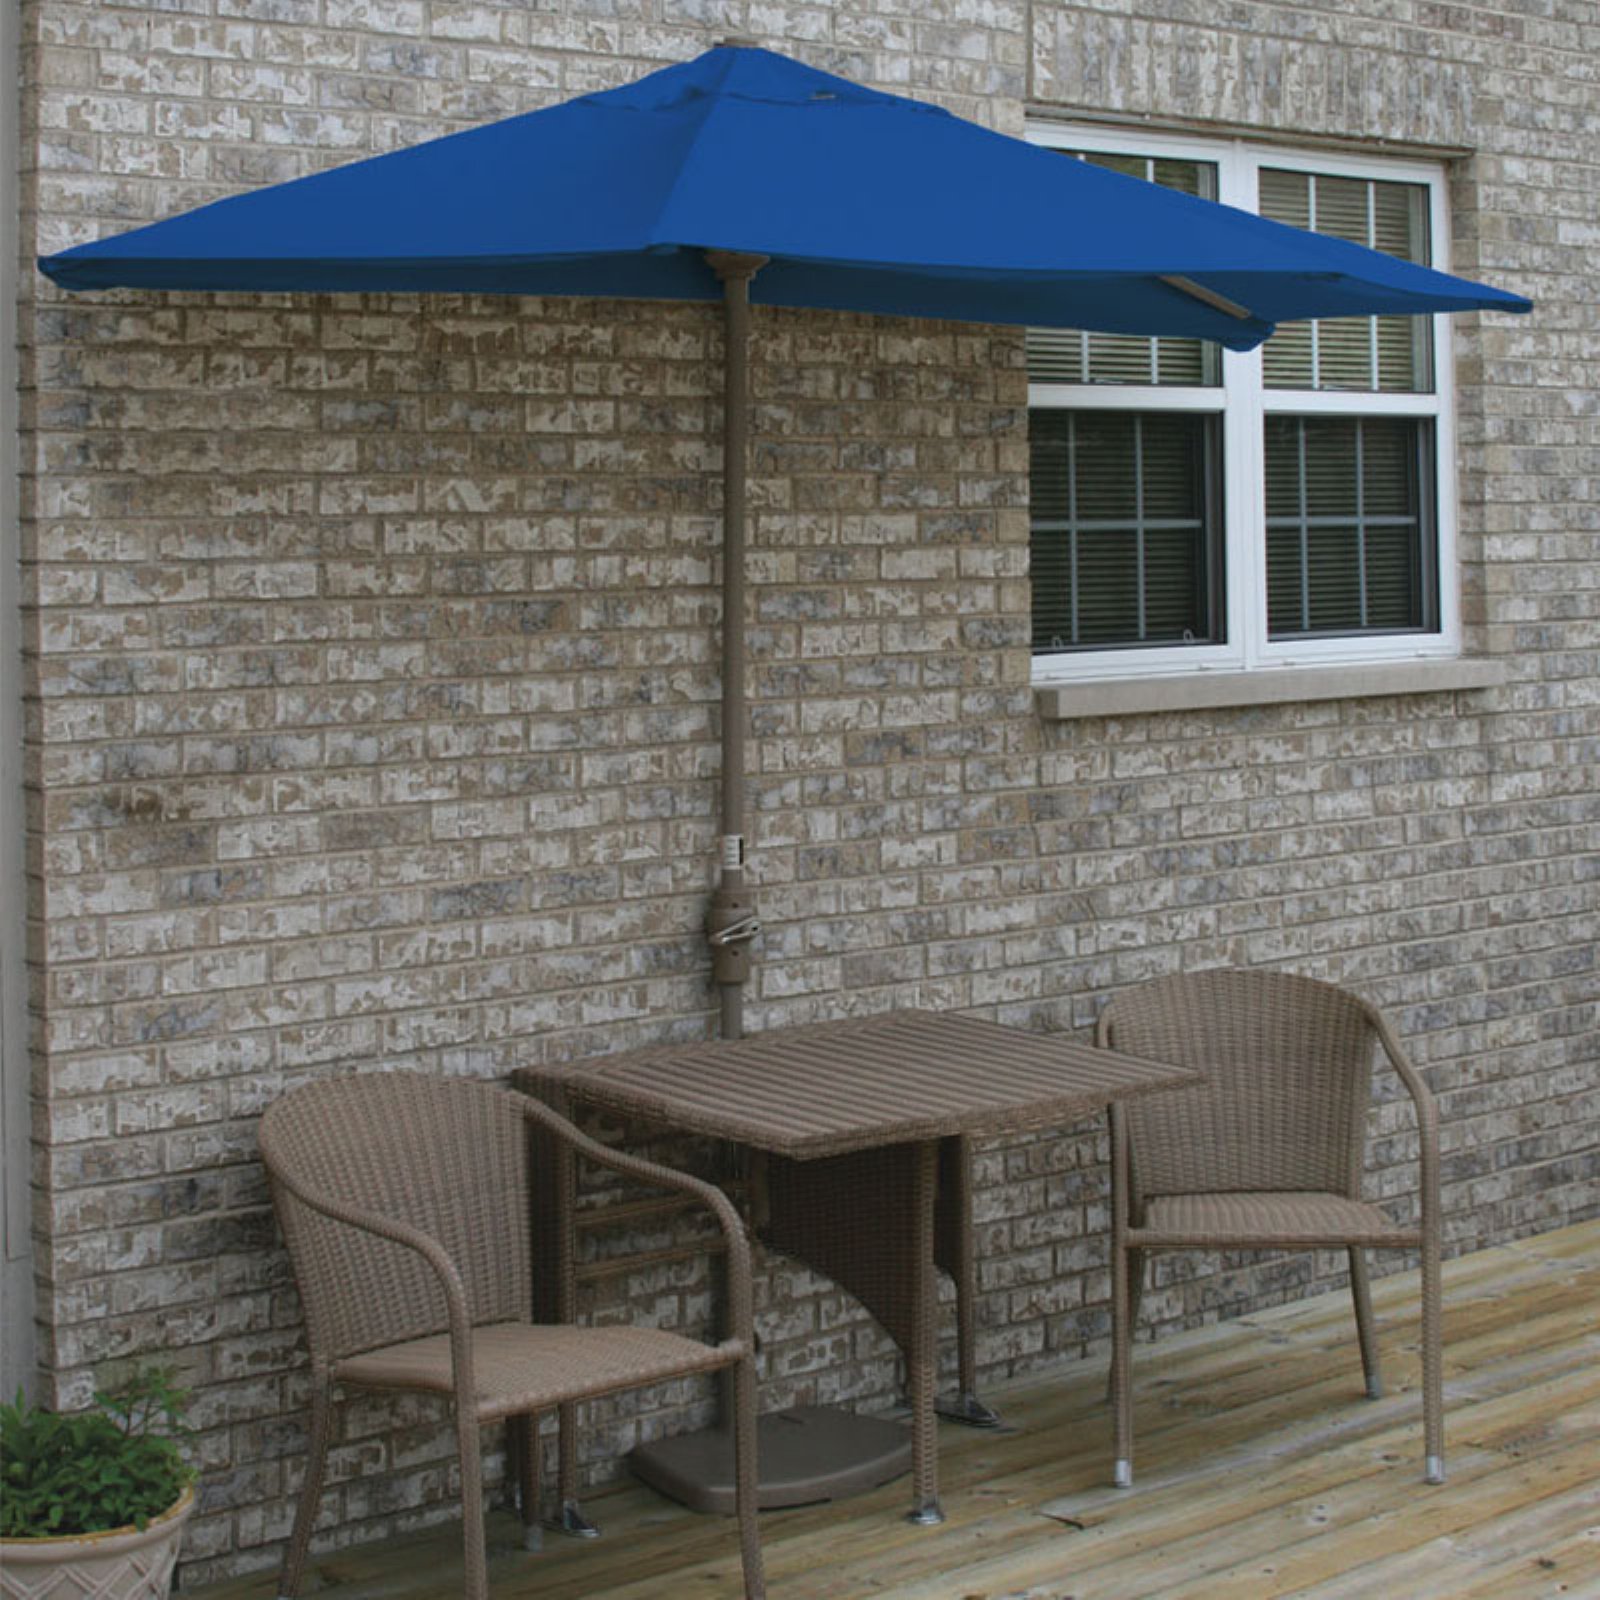 Blue Star Group Terrace Mates Daniella All-Weather Wicker Coffee Color Table Set w/ 9'-Wide OFF-THE-WALL BRELLA - Jockey Red Sunbrella Canopy - image 2 of 9